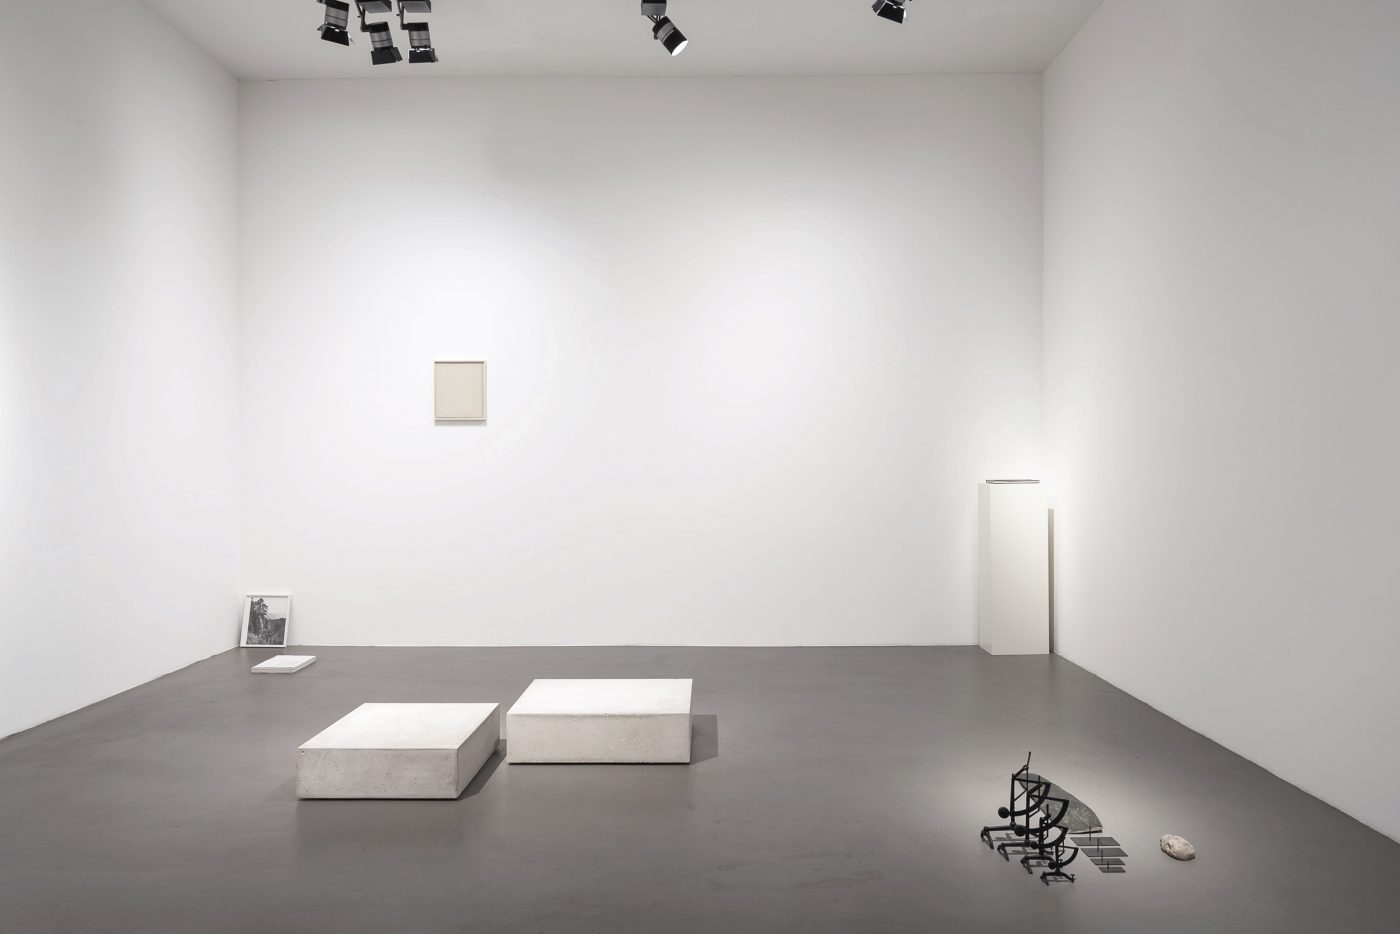 Daniel Gustav Cramer. Installation view dOCUMENTA(13), 2012, in collaboration with Haris Epaminonda
